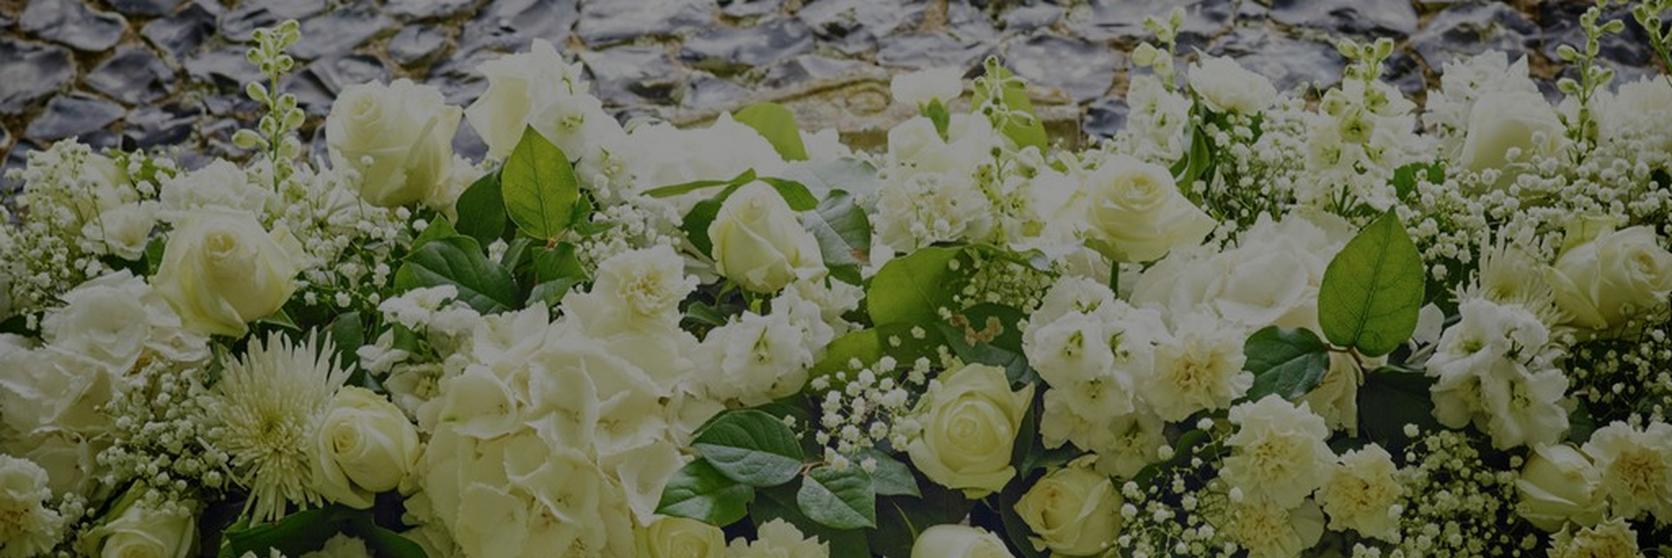 Meghan-markles-wedding-flowers-1